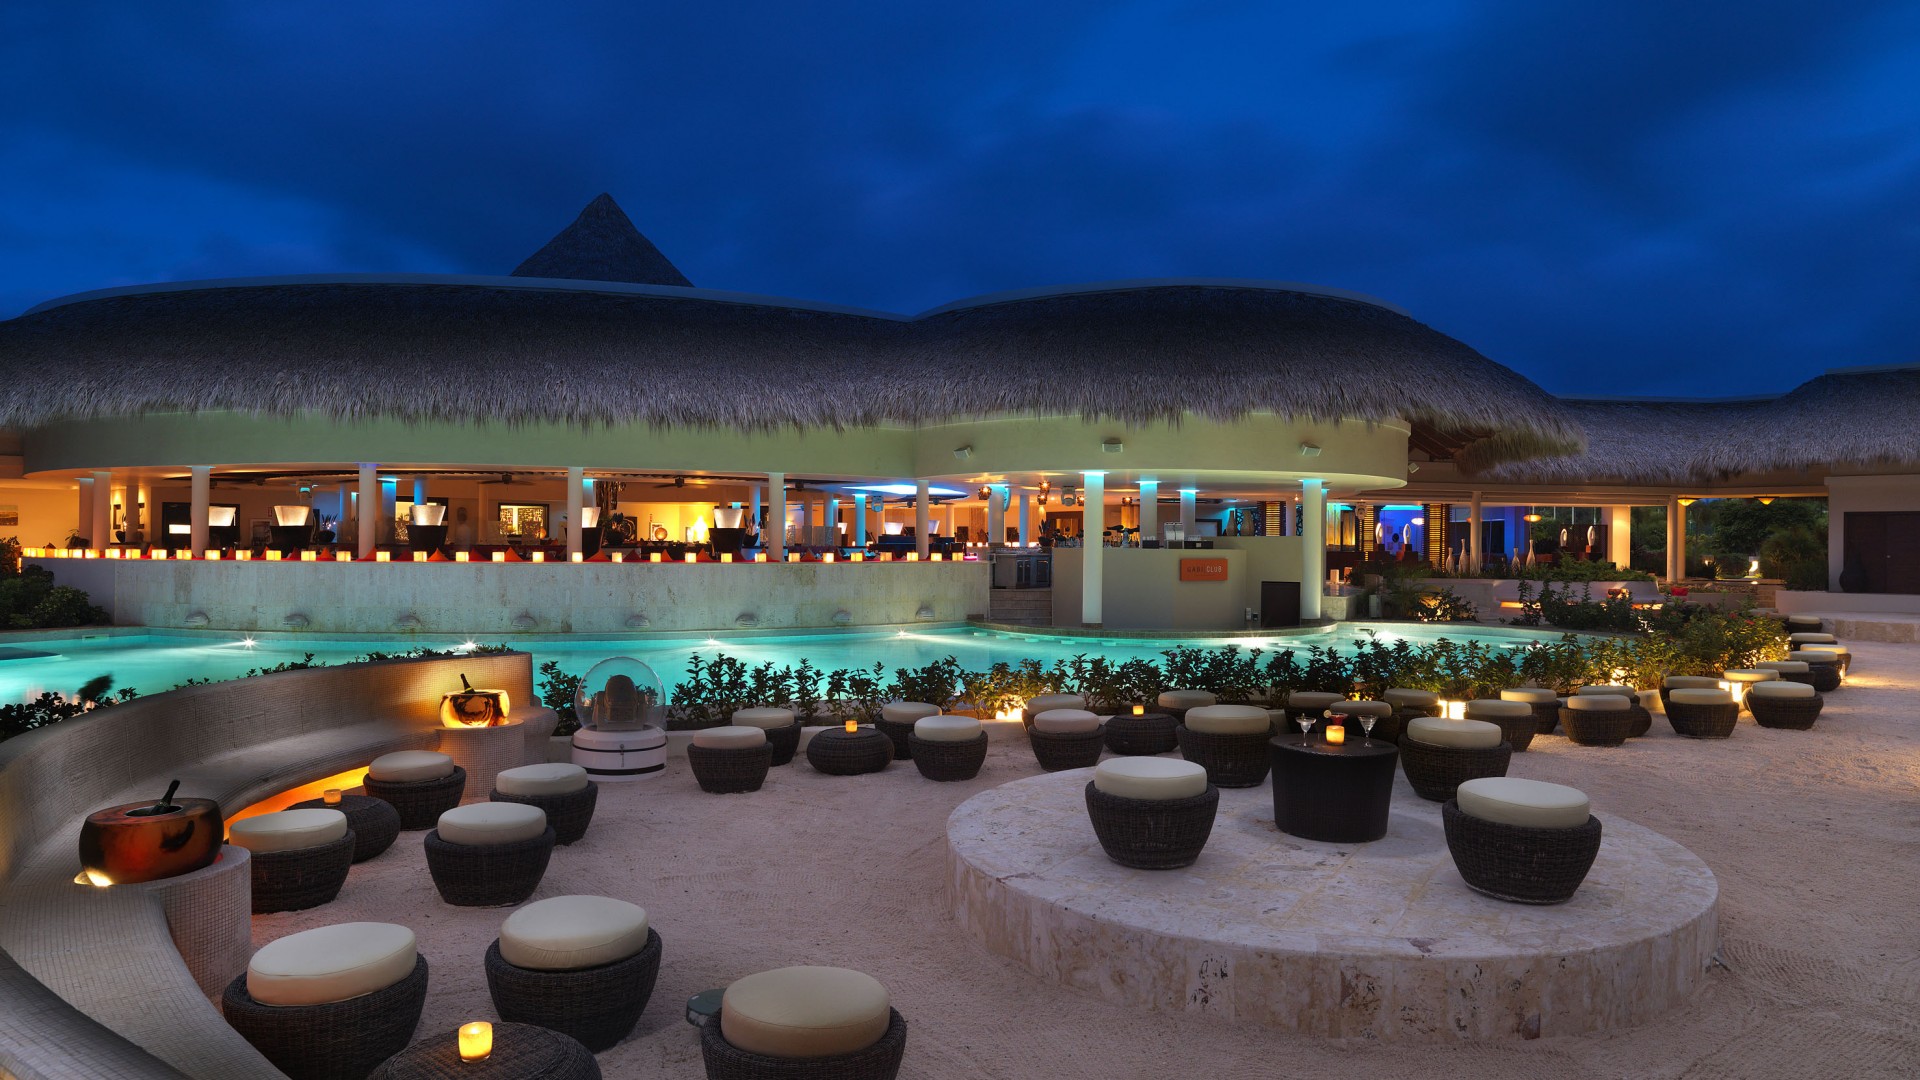 Paradisus Palma Real, Punta Kana, Best Hotels of 2017, tourism, travel, resort, vacation, cafe (horizontal)